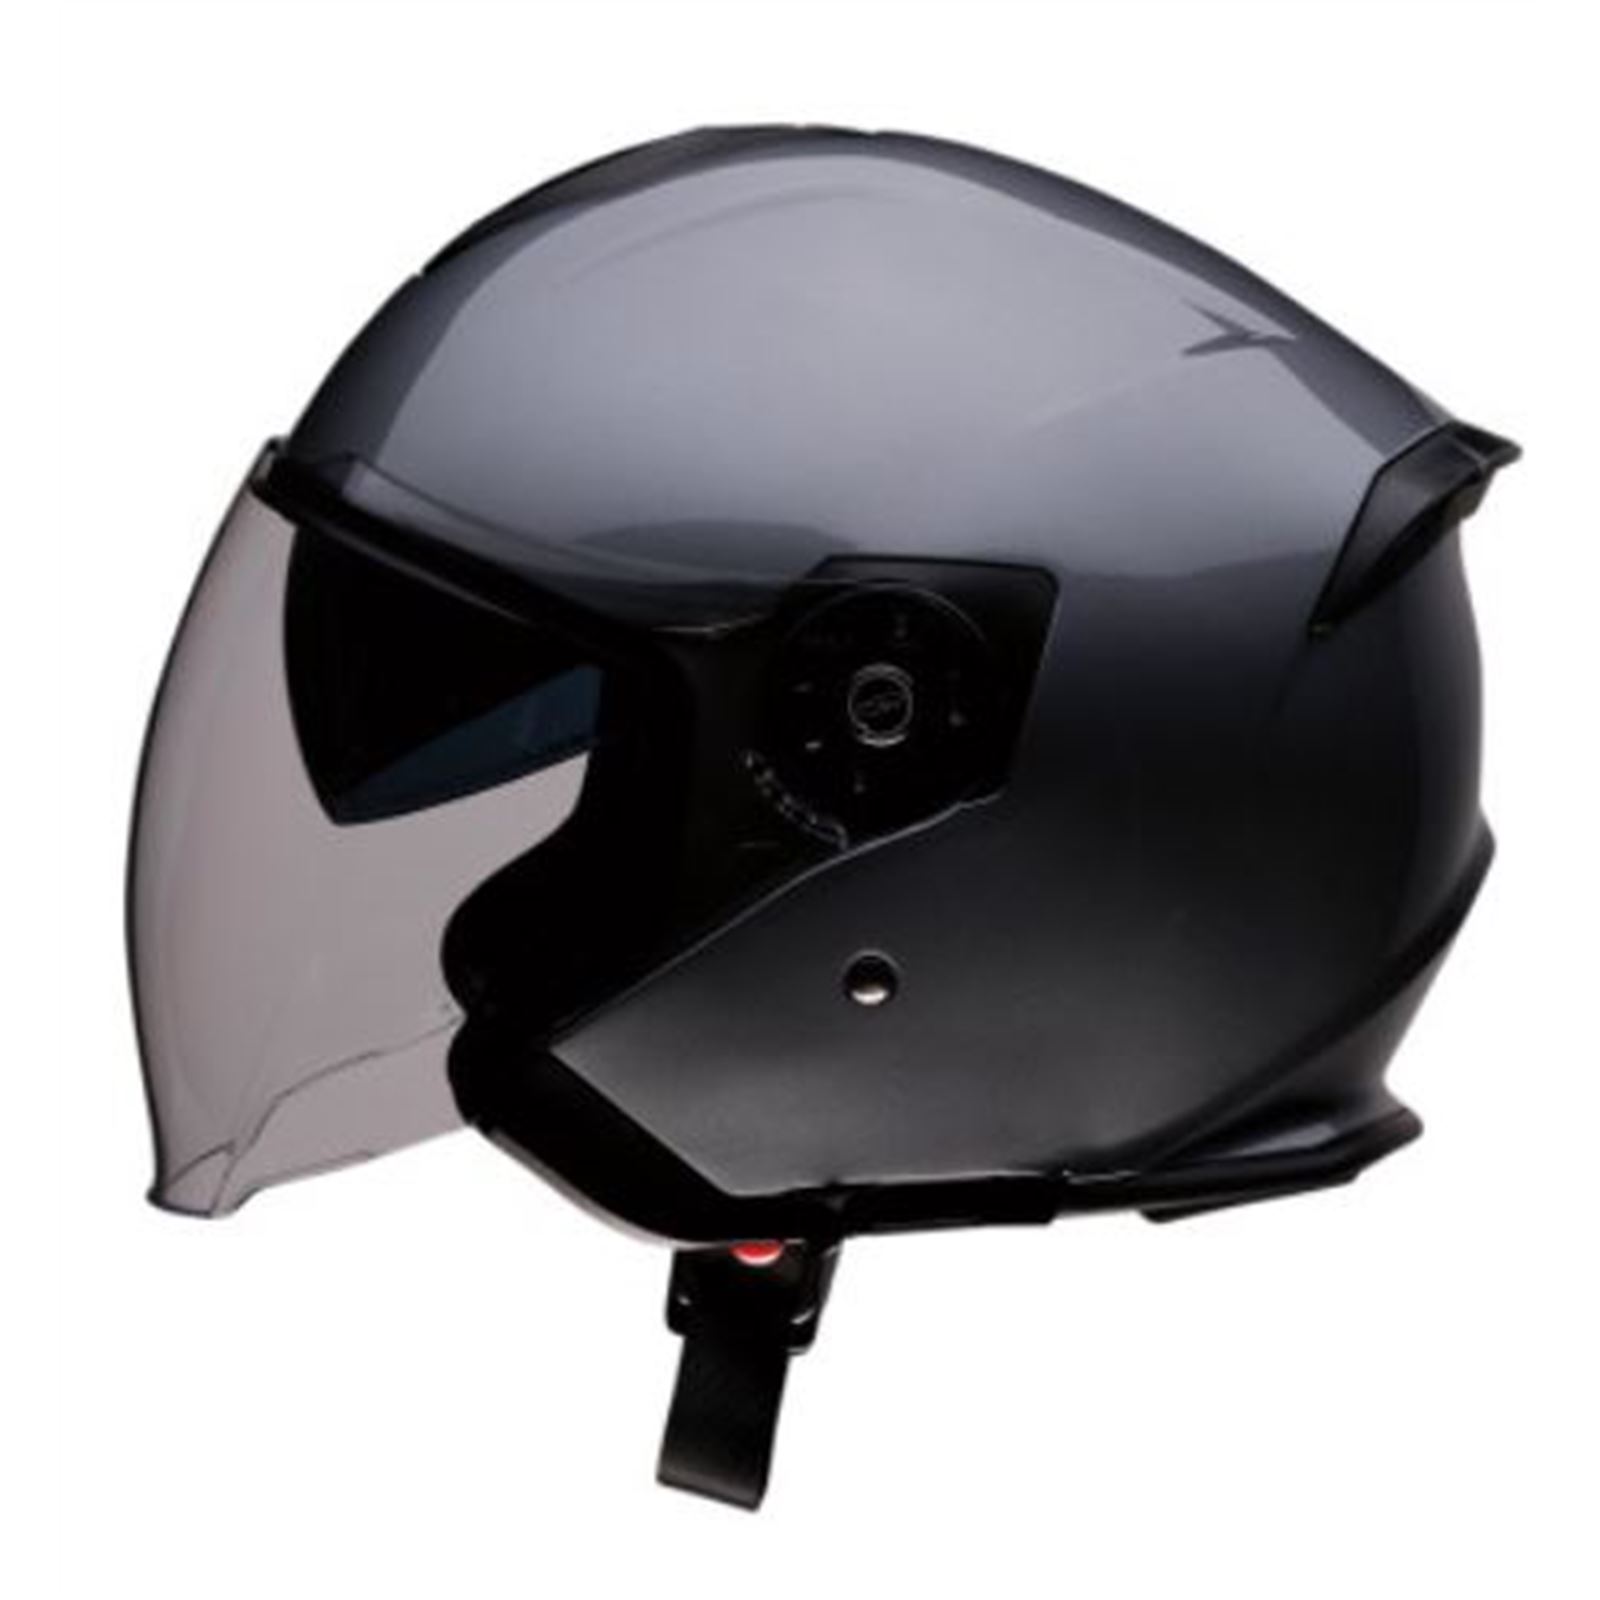 Z1R Road Maxx Helmet - Dark Silver - Small